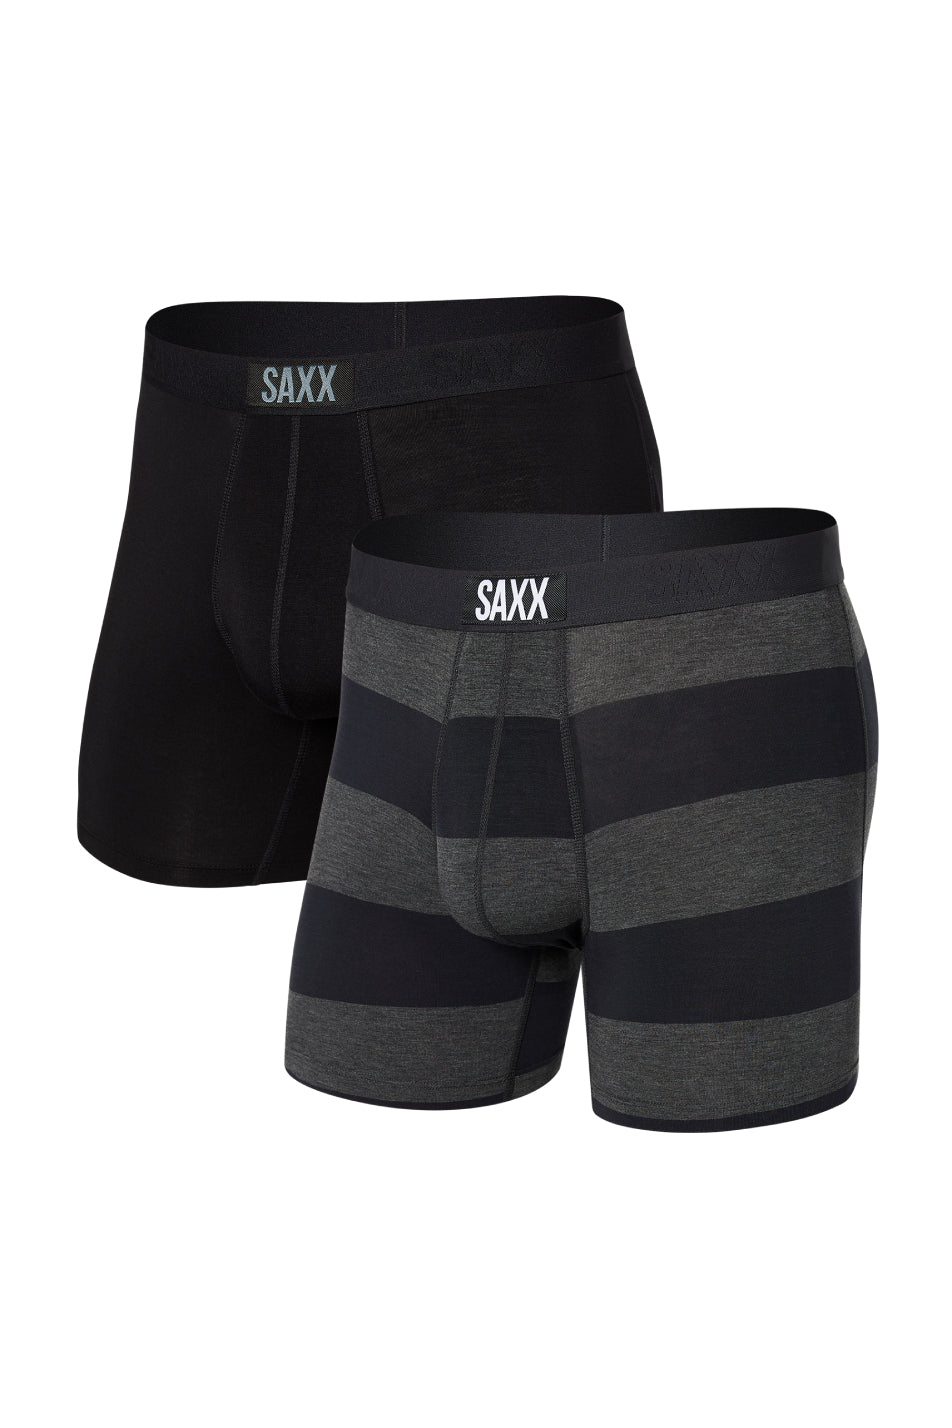 SAXX 2 Pack Men's Vibe Super Soft Boxer Brief